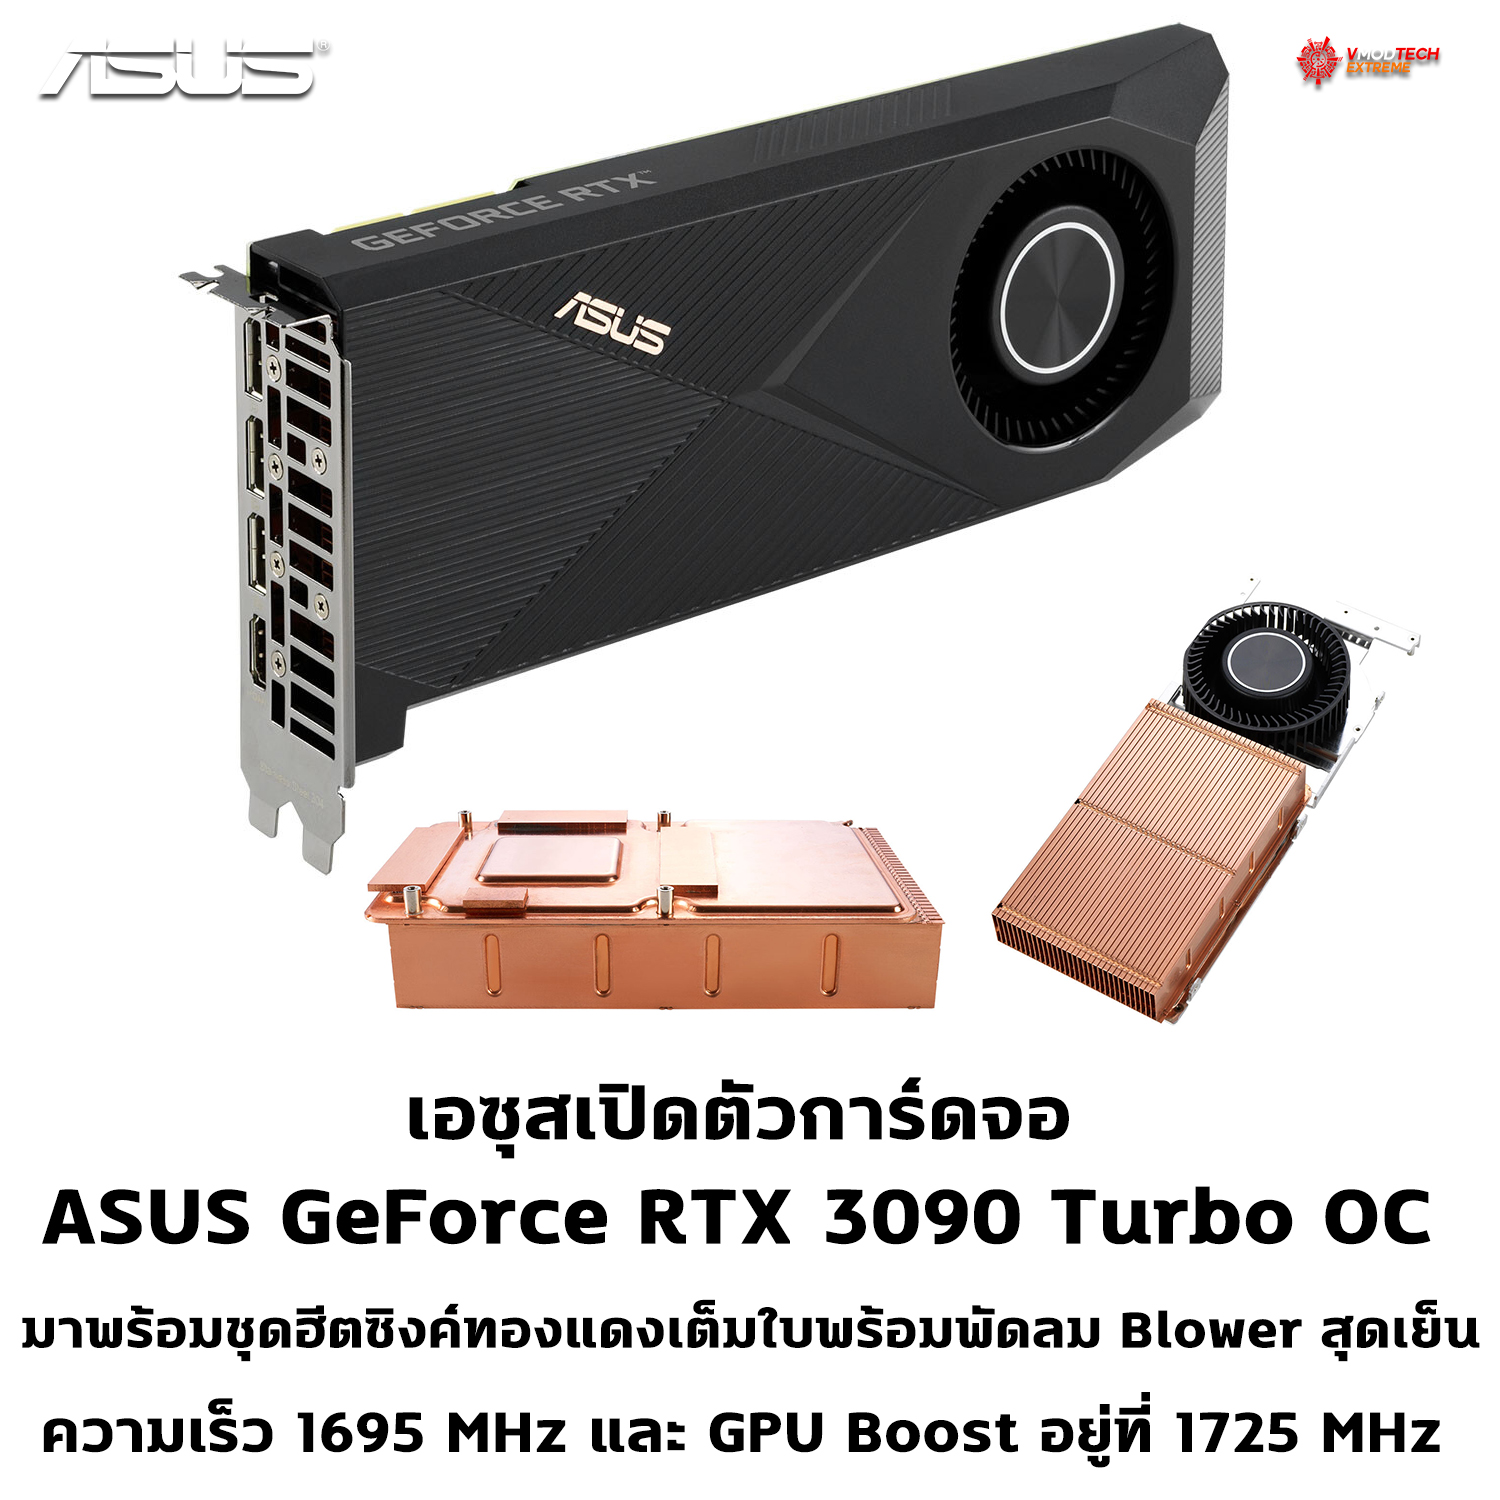 asus geforce rtx 3090 turbo oc เอซุสเปิดตัวการ์ดจอ ASUS GeForce RTX 3090 Turbo OC มาพร้อมชุดฮีตซิงค์ทองแดงเต็มใบพร้อมพัดลม Blower สุดเย็น